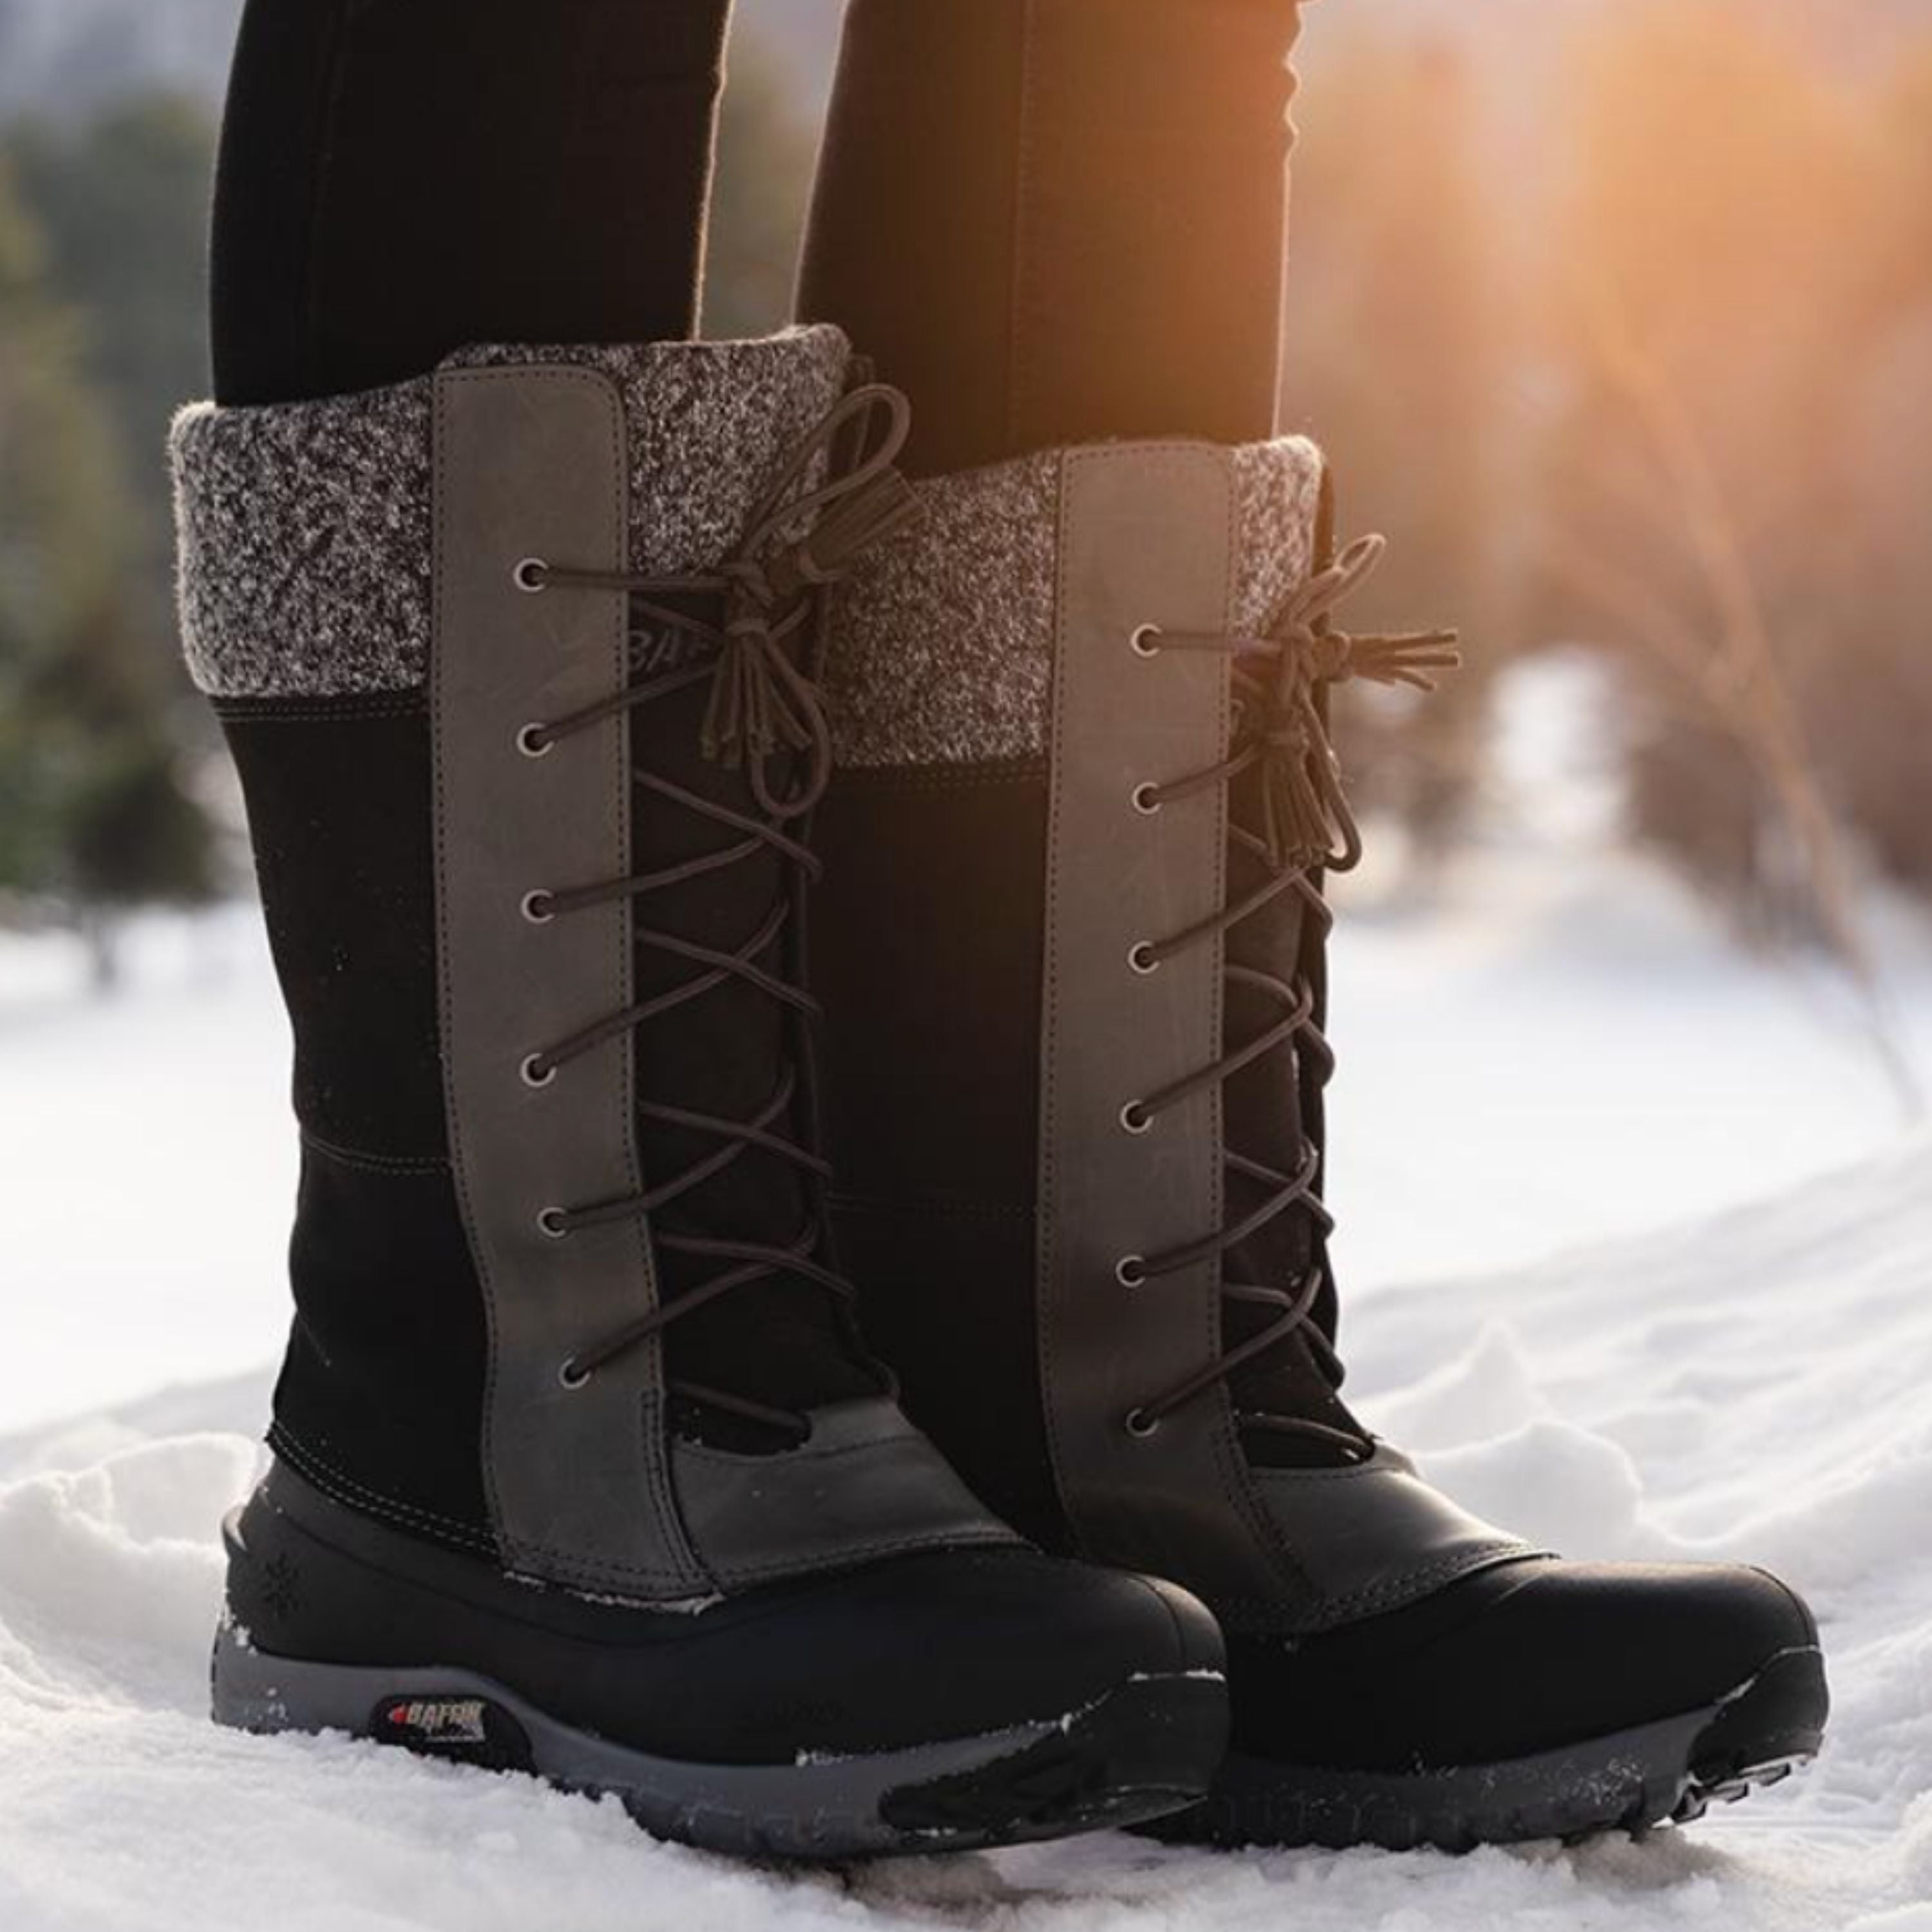 "Dana" Winter boots - Women's